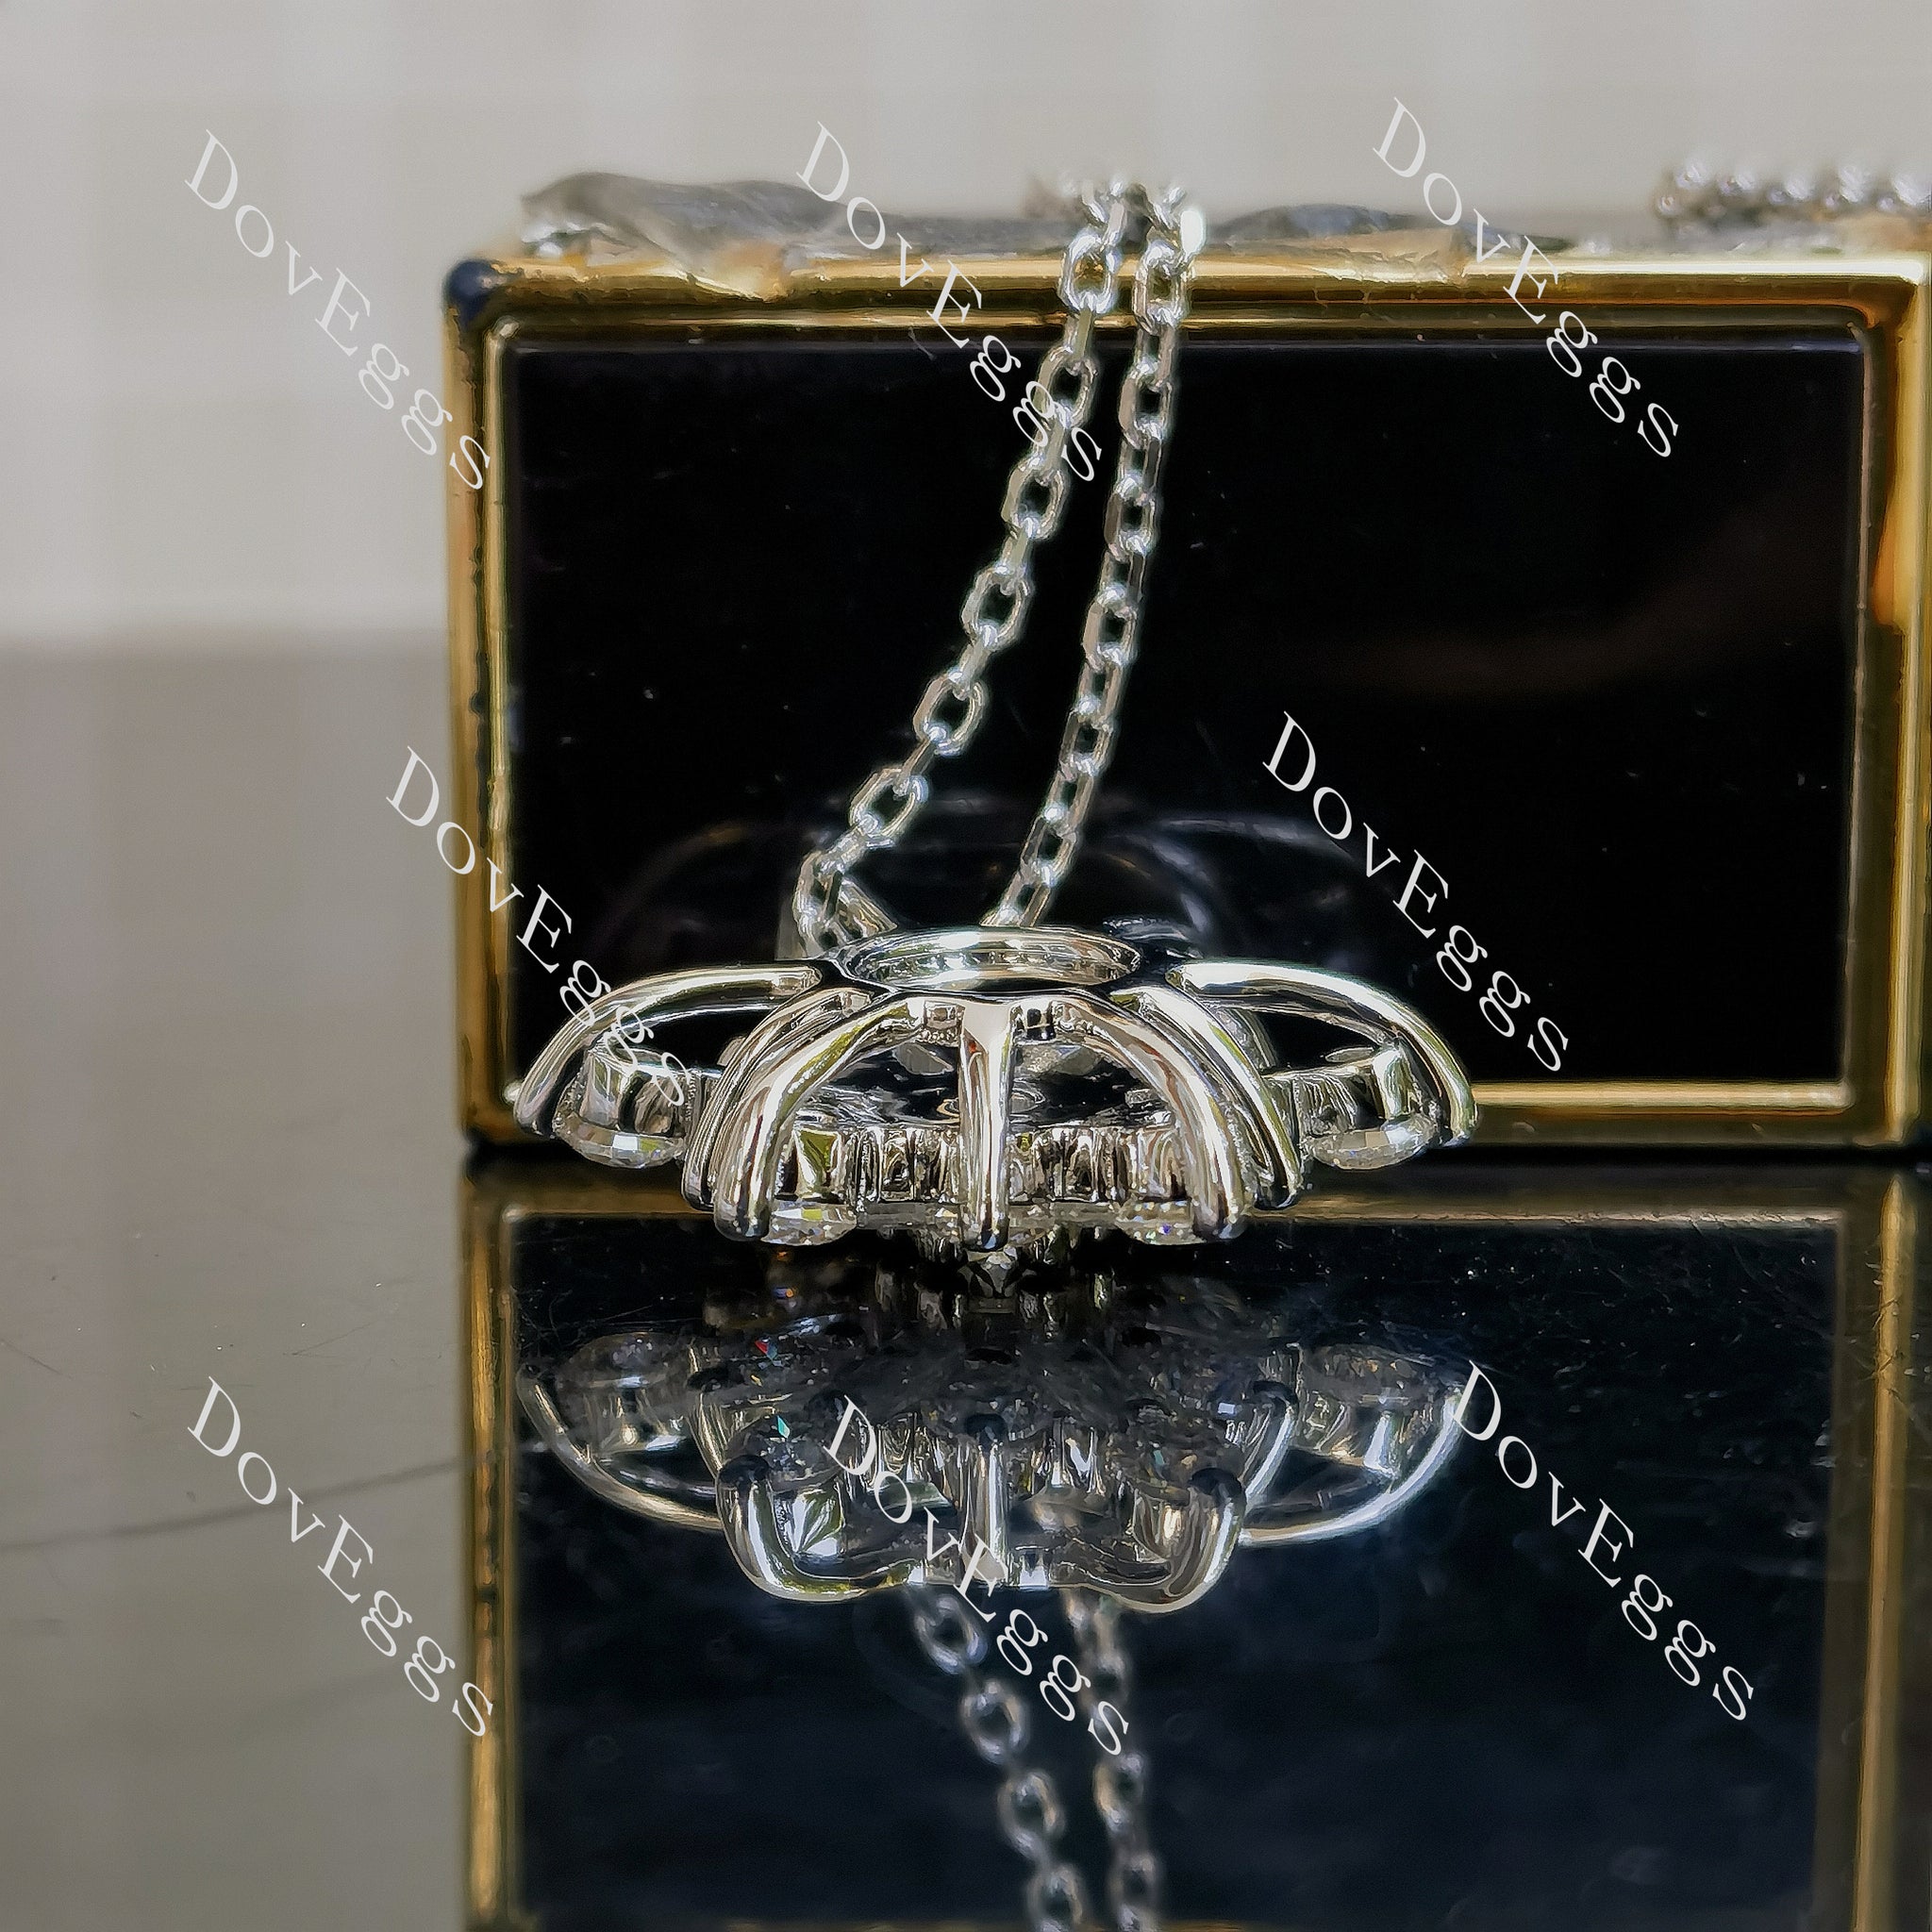 Doveggs round baguette snowflake moissanite/lad grown diamond pendant necklace(pendant only)